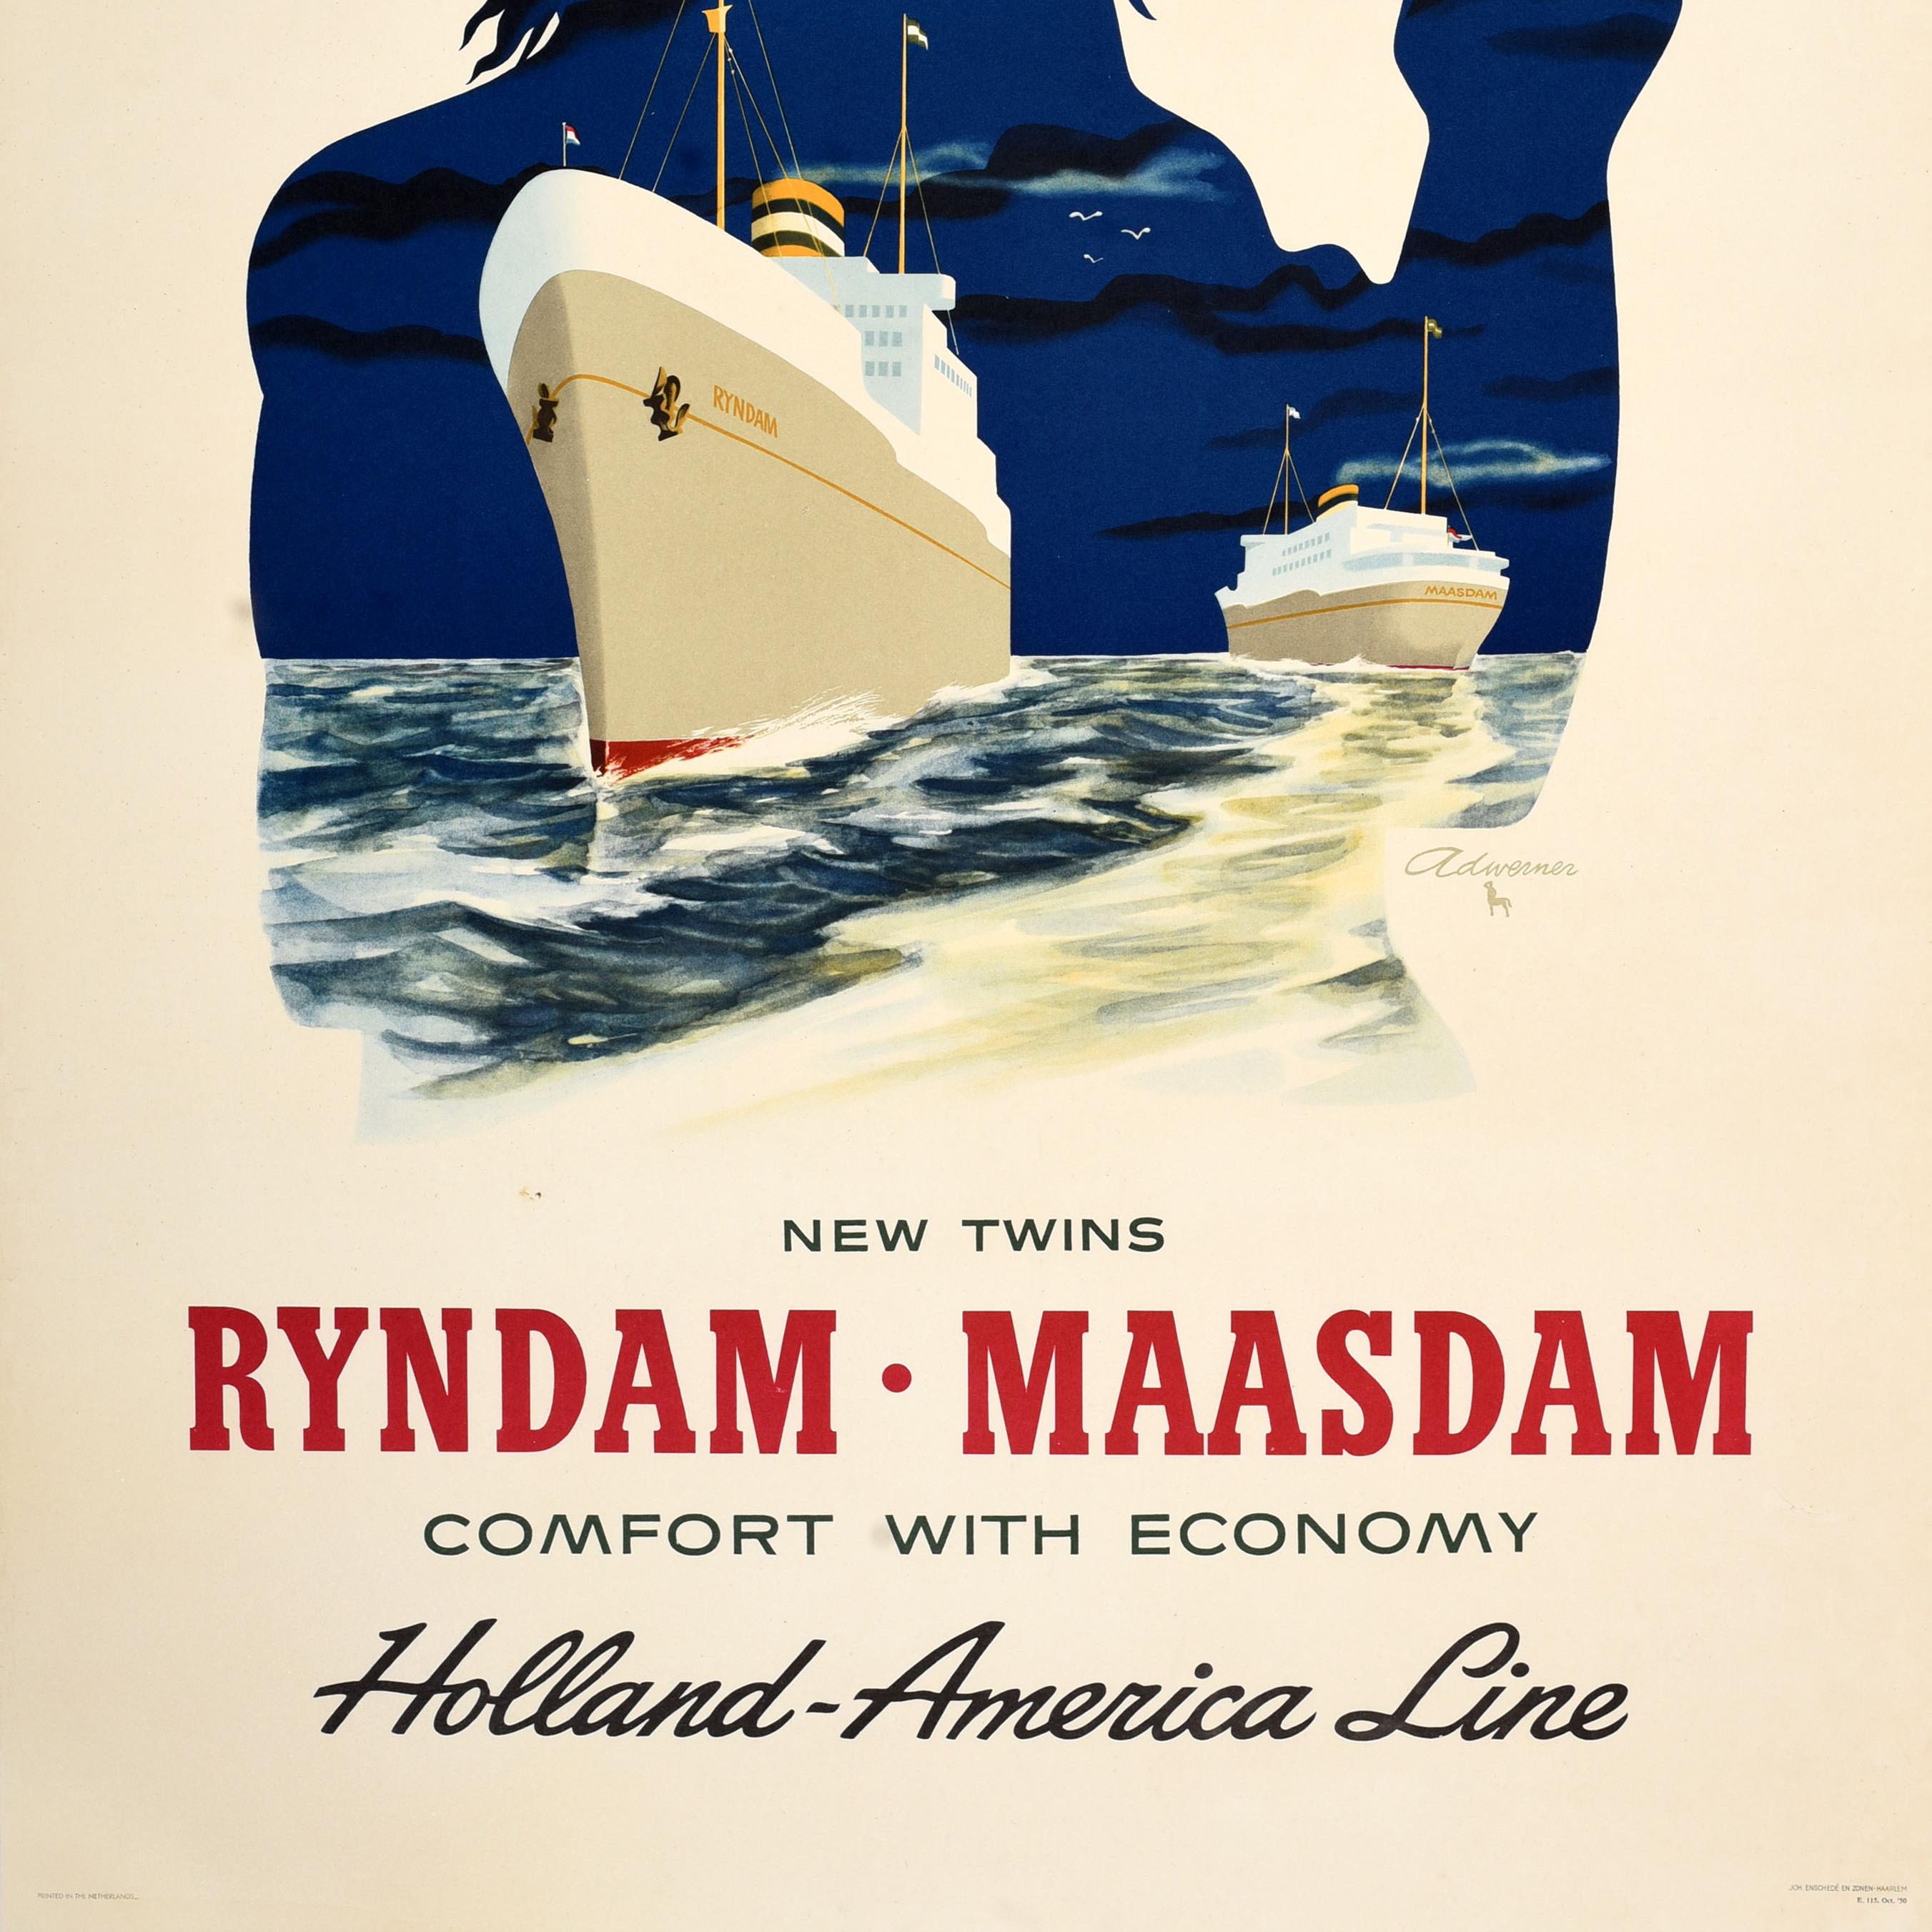 Original Vintage Travel Poster Ryndam Maasdam Holland America Line Poseidon Art In Good Condition For Sale In London, GB